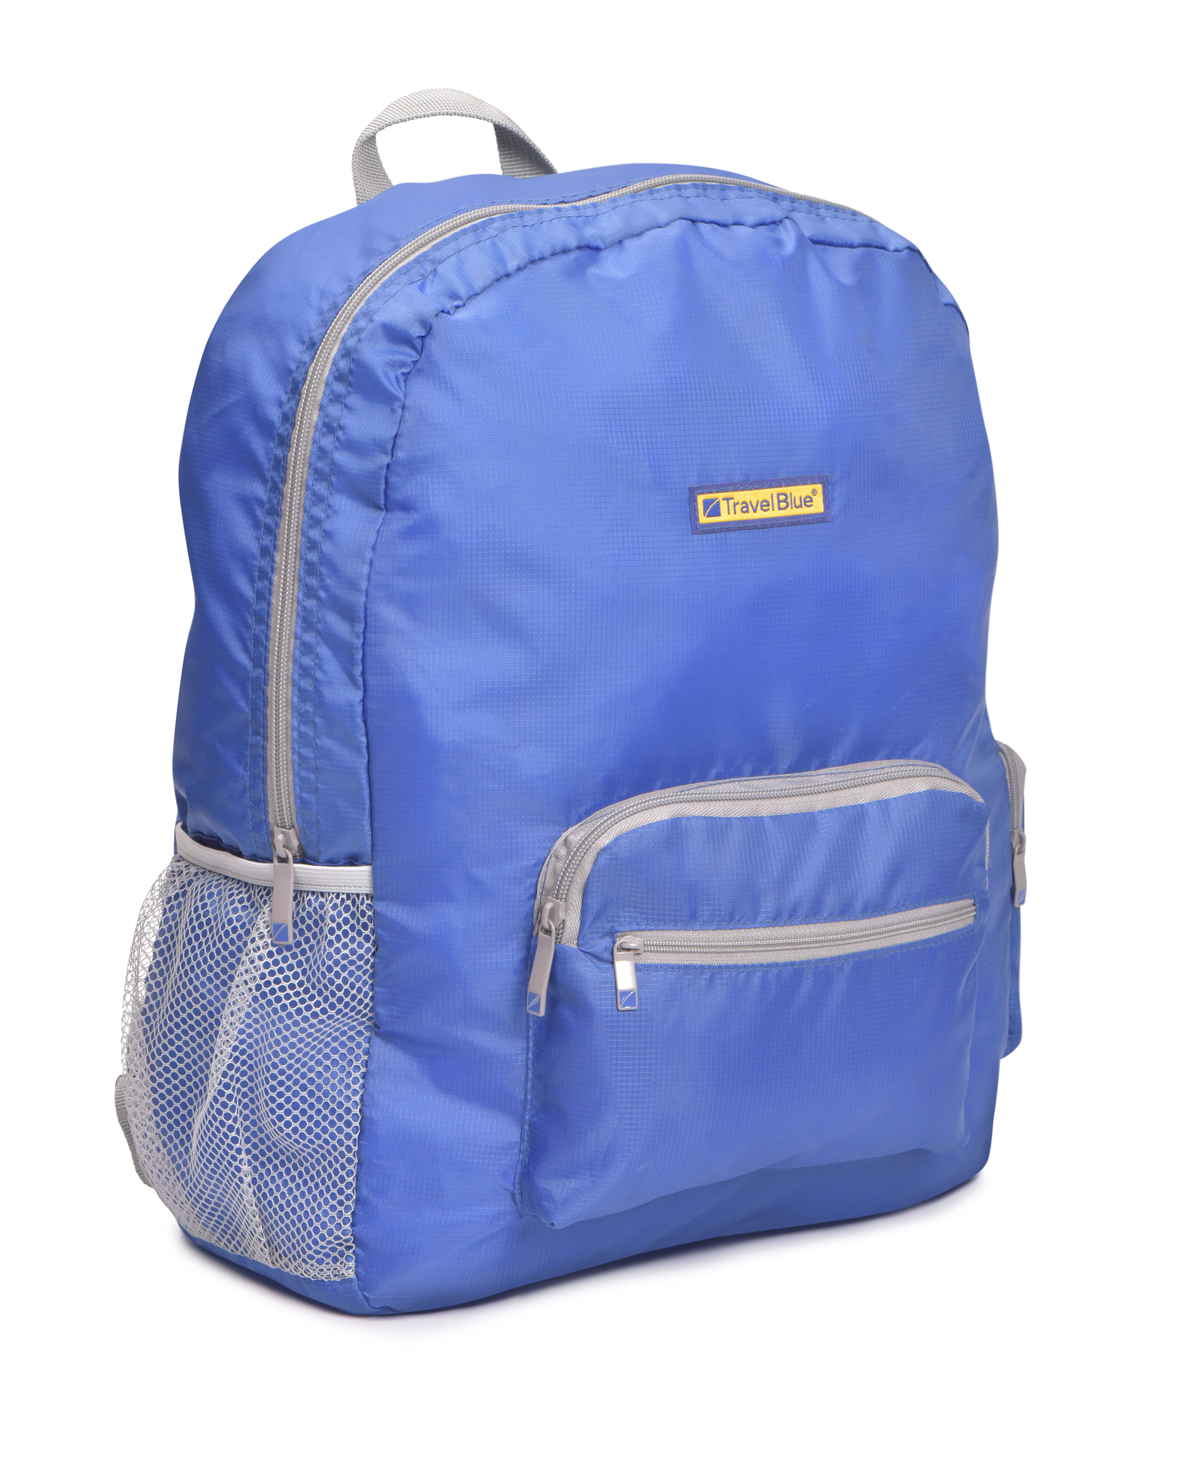 Travel Blue Foldable Backpack Lightweight